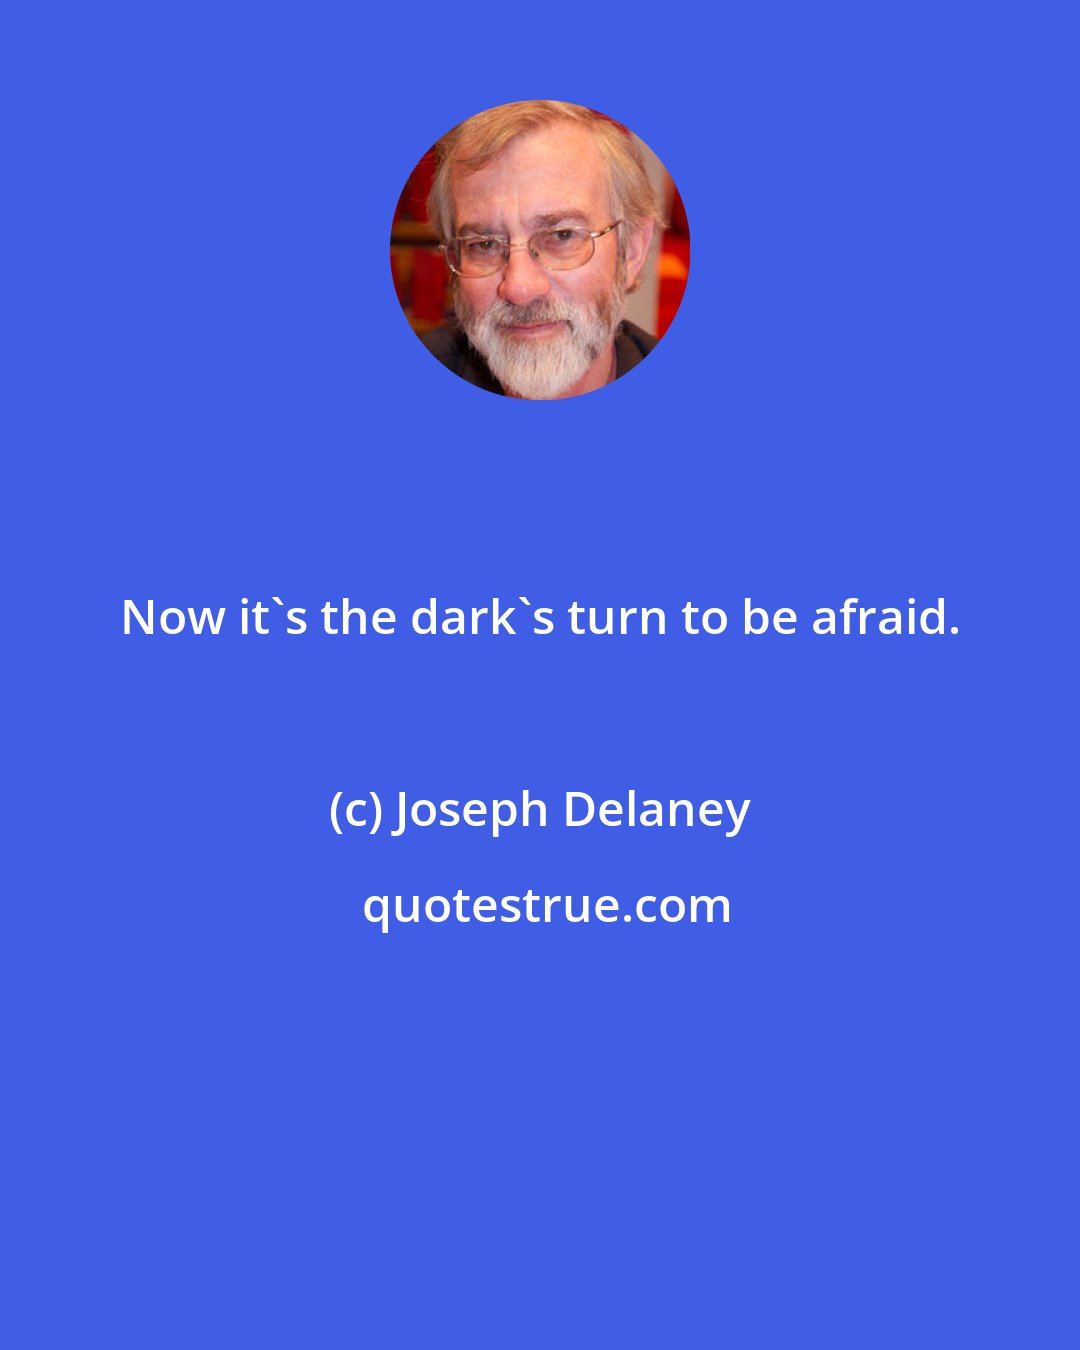 Joseph Delaney: Now it's the dark's turn to be afraid.